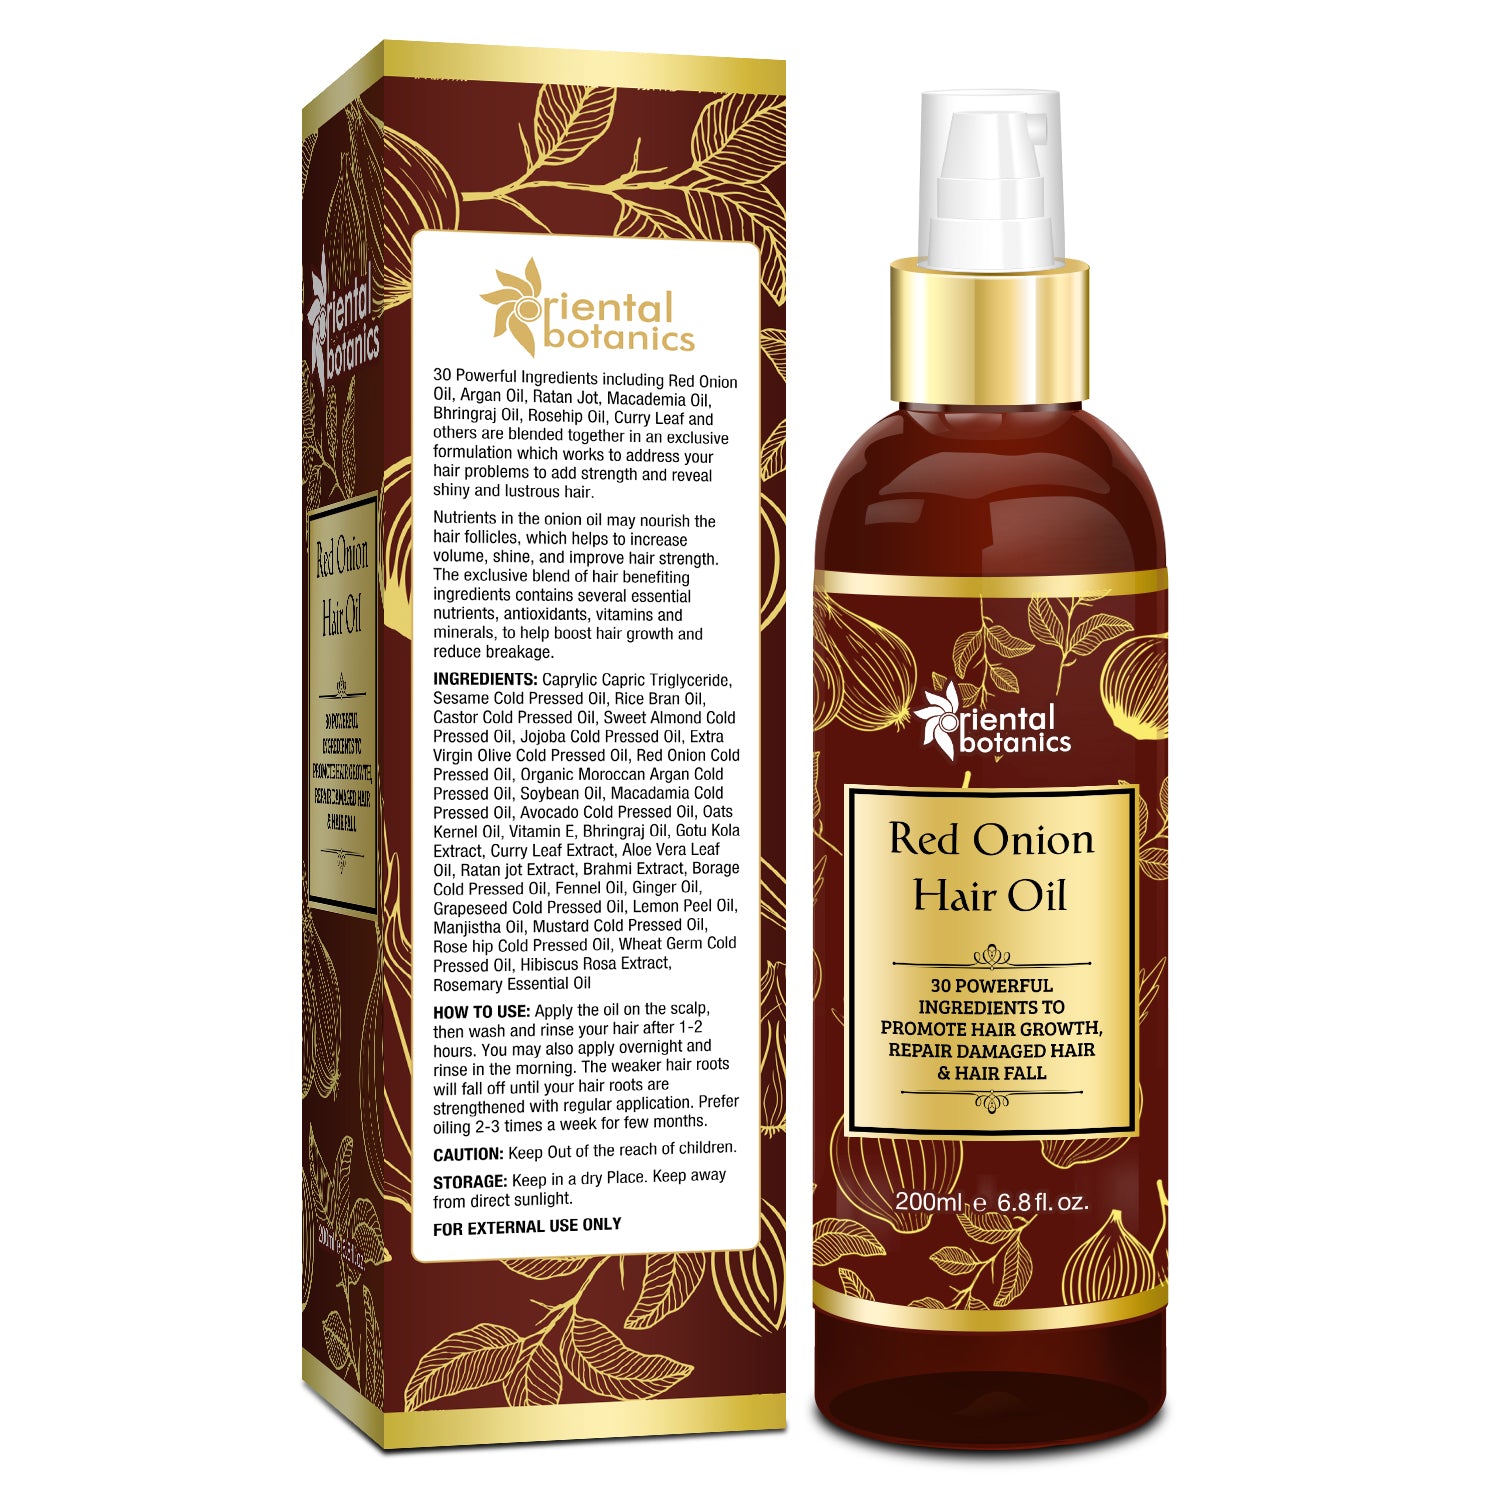 Oriental Botanics Red Onion Hair Oil, With 30 Oils & Extracts, Argan Oil, Castor, Bhringraj, Almond Oil, 200 ml